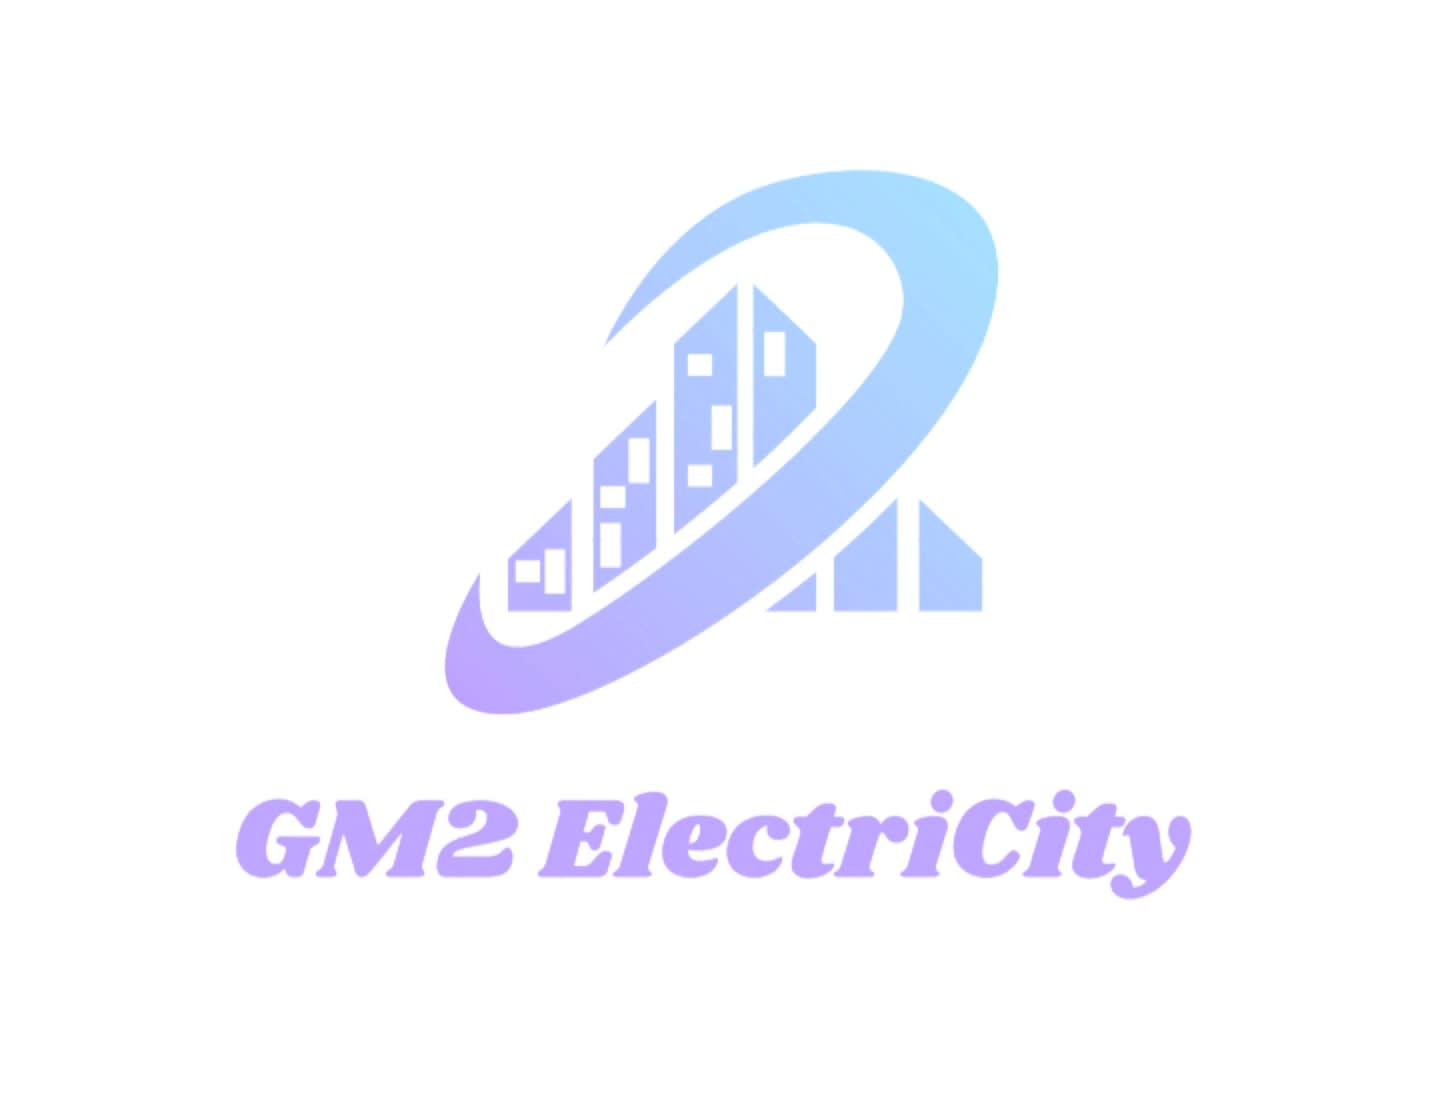 GM2 ElectriCity